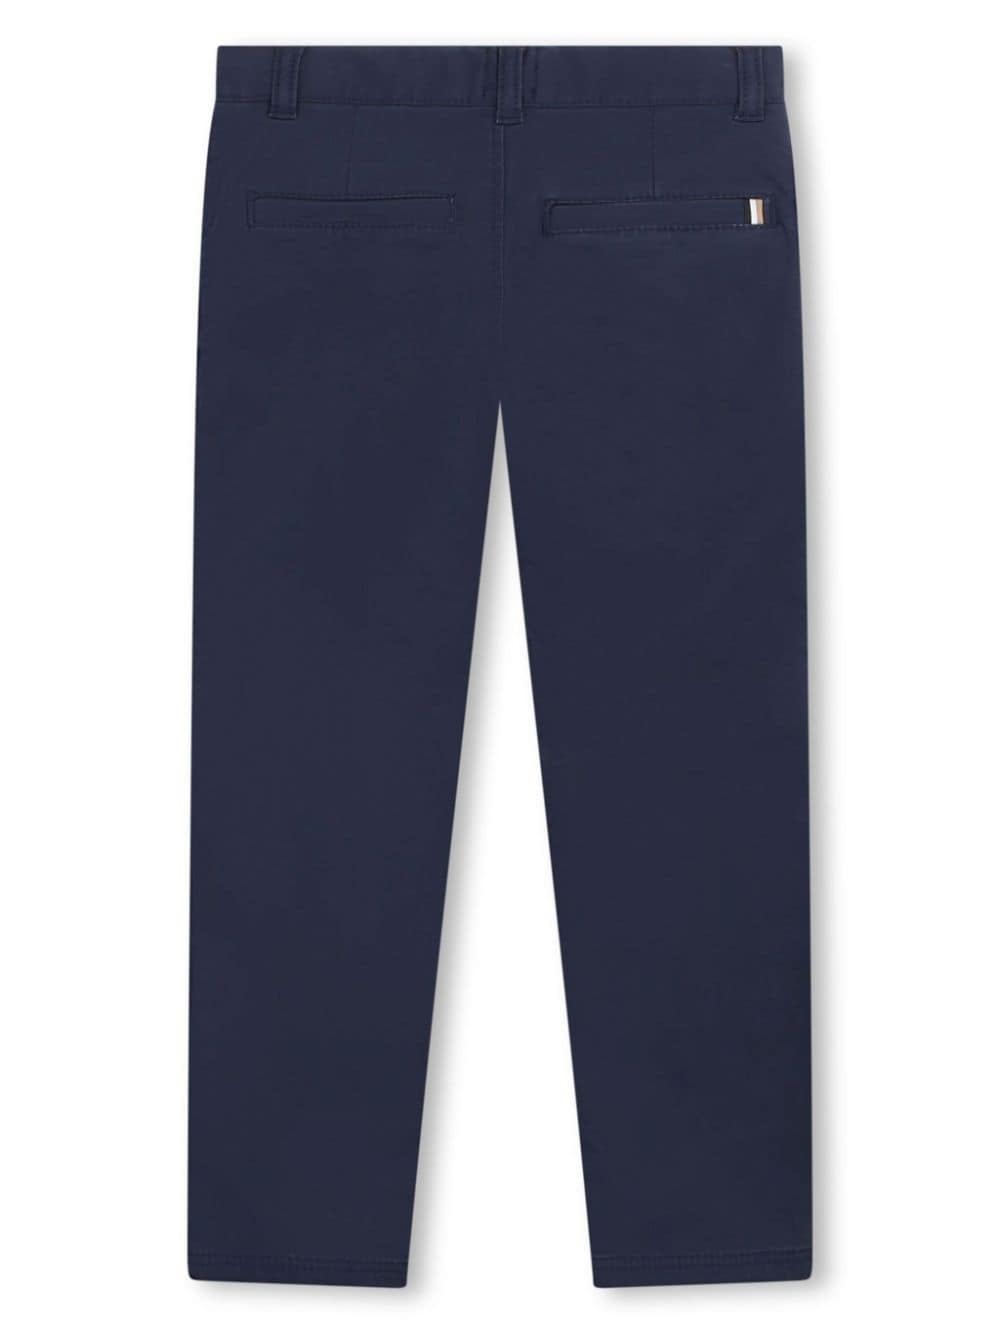 Navy blue cotton gabardine boy HUGO BOSS pants | Carofiglio Junior